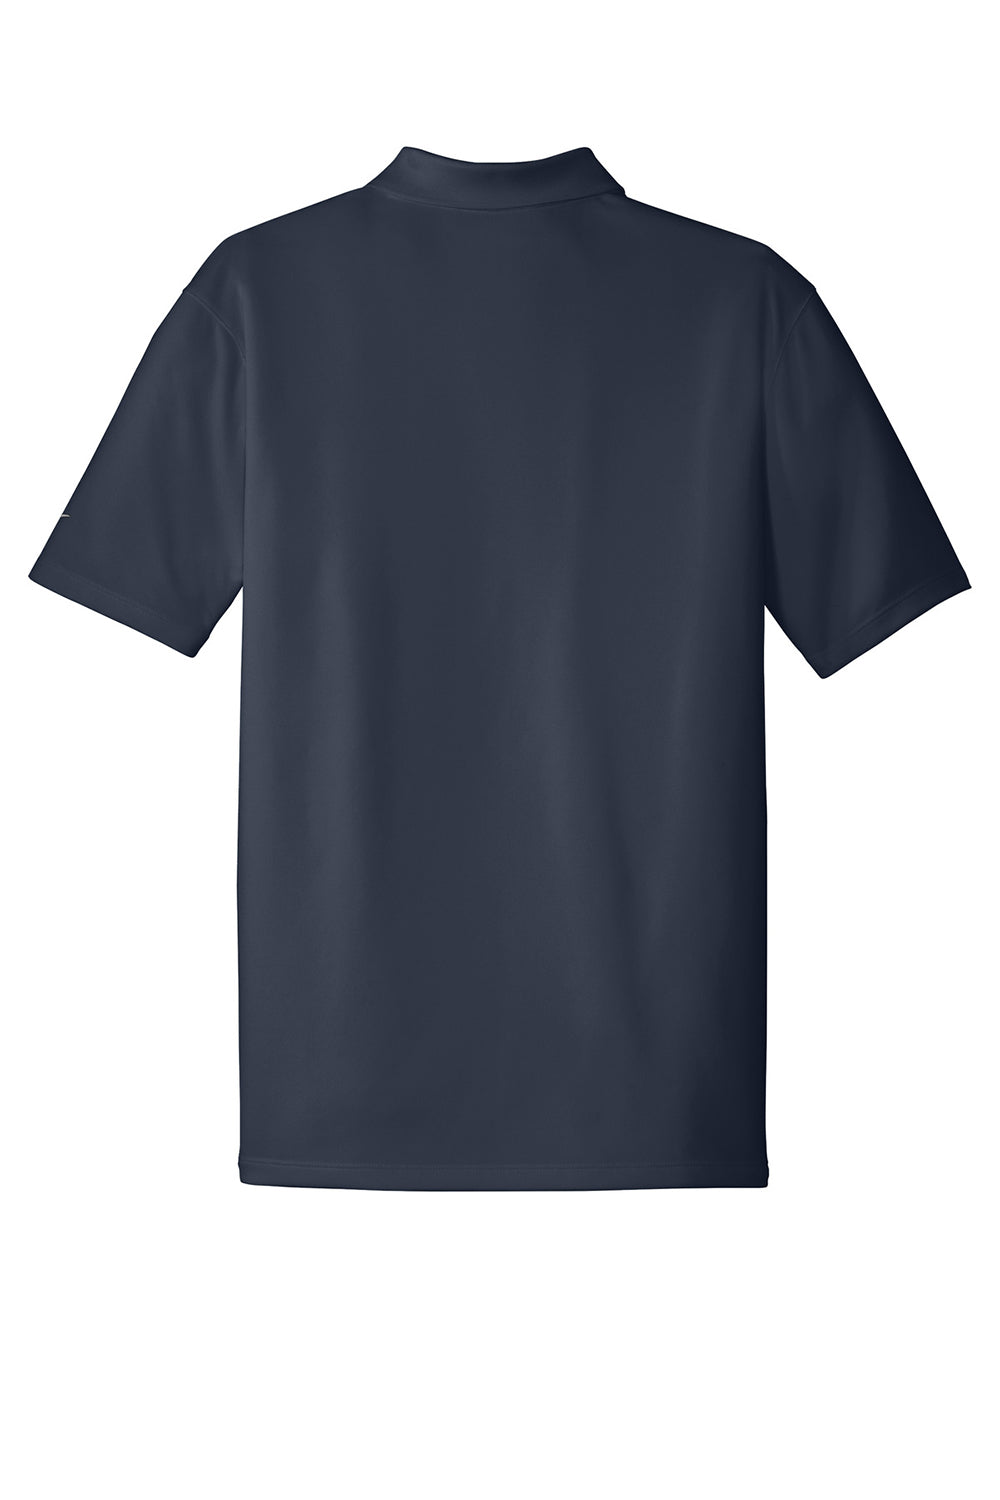 Nike 838956 Mens Players Dri-Fit Moisture Wicking Short Sleeve Polo Shirt Navy Blue Flat Back